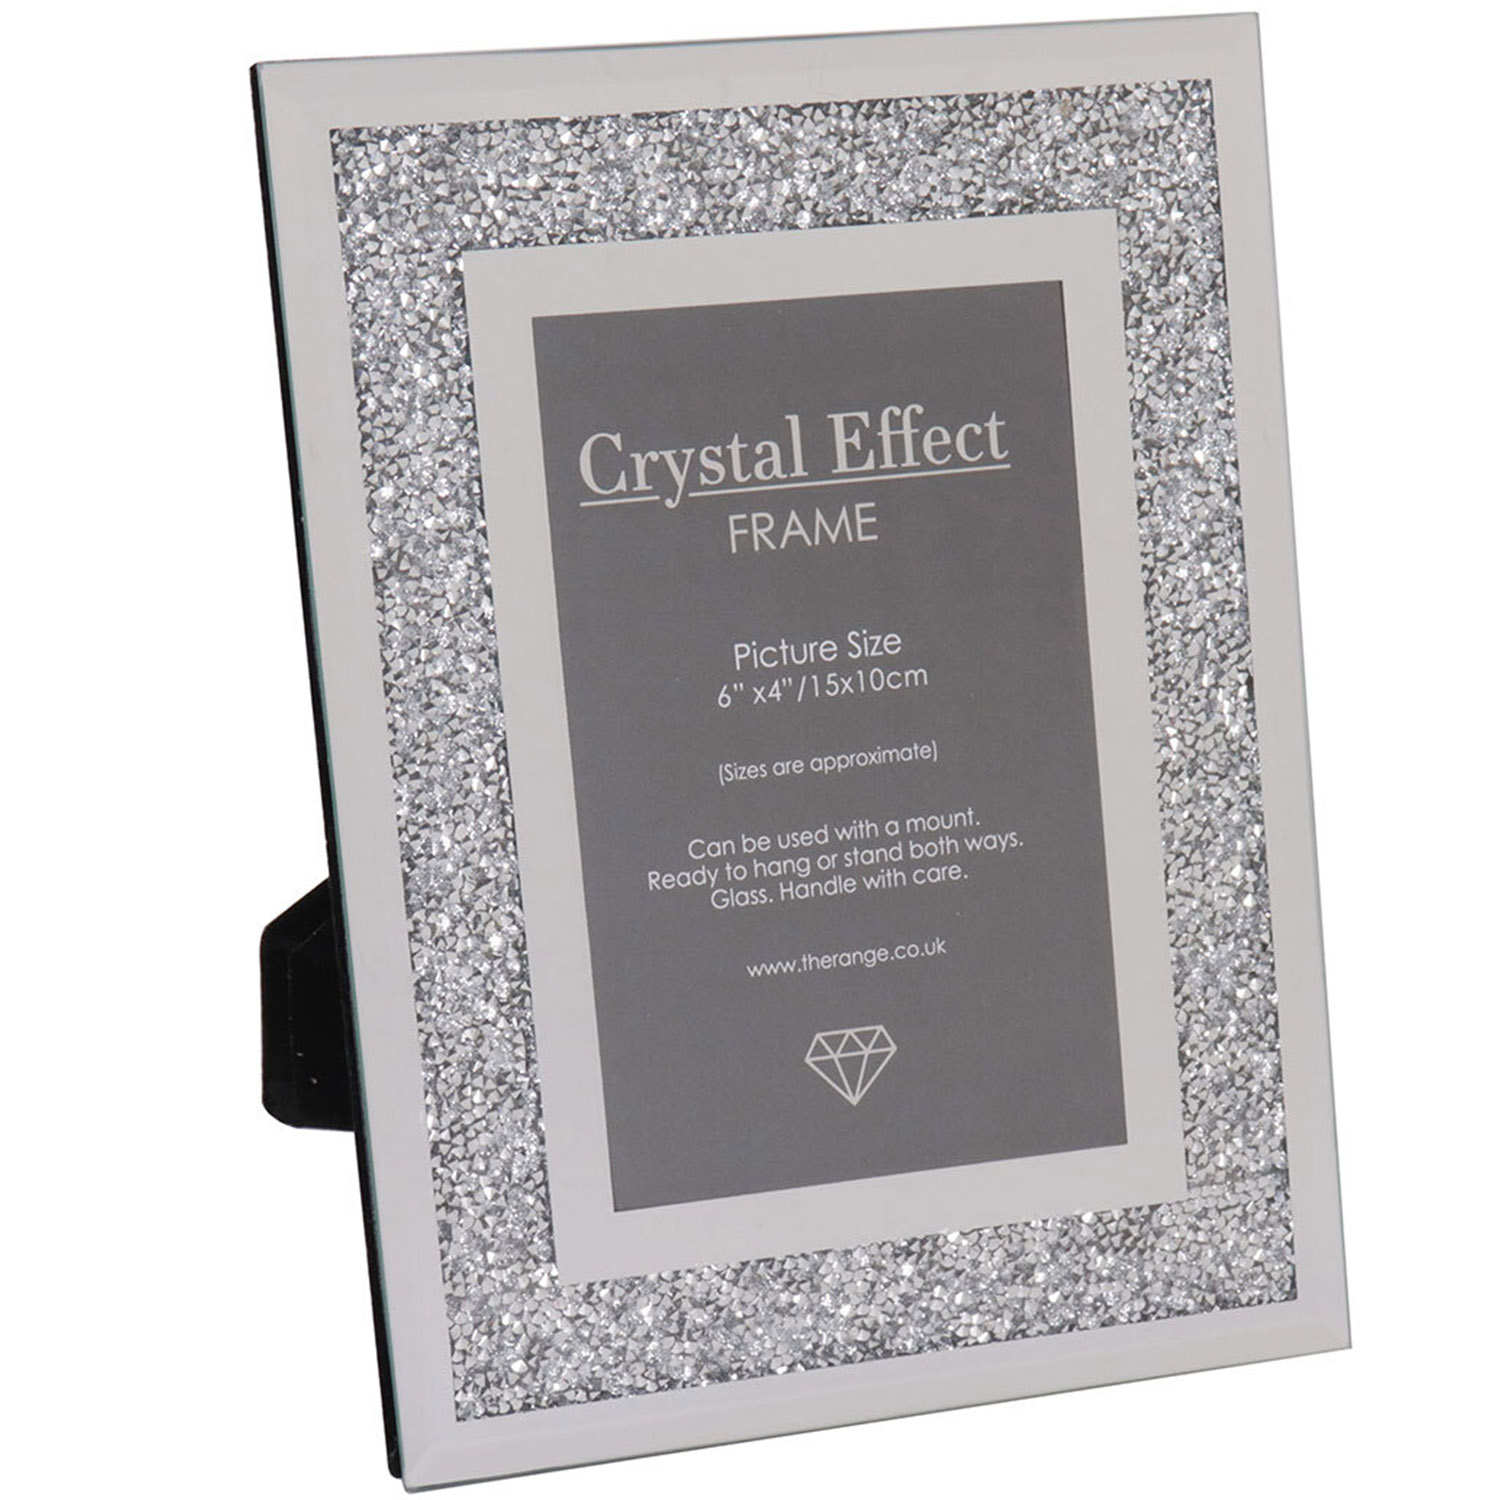 Jonas & James Silver Crystal Effect Frame 6 x 4 inch Image 1